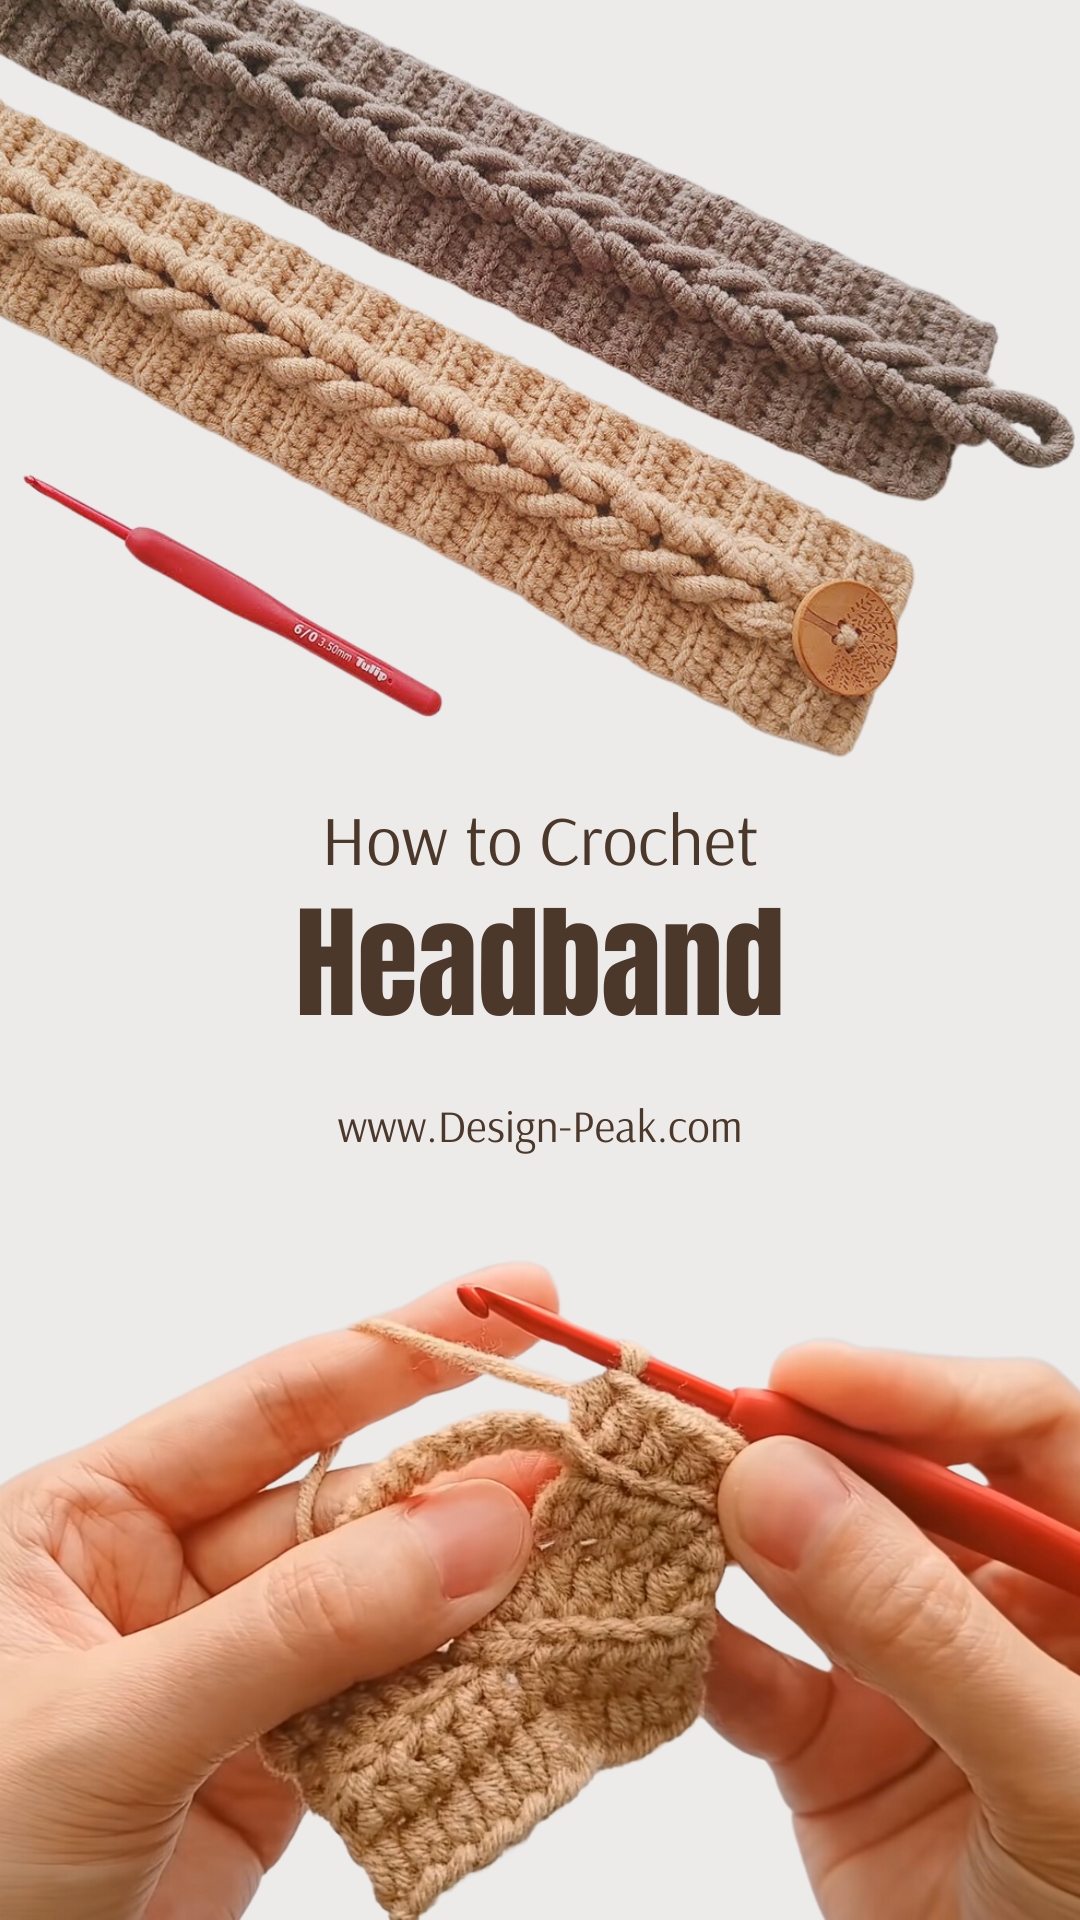 Guide to Crocheting a Headband